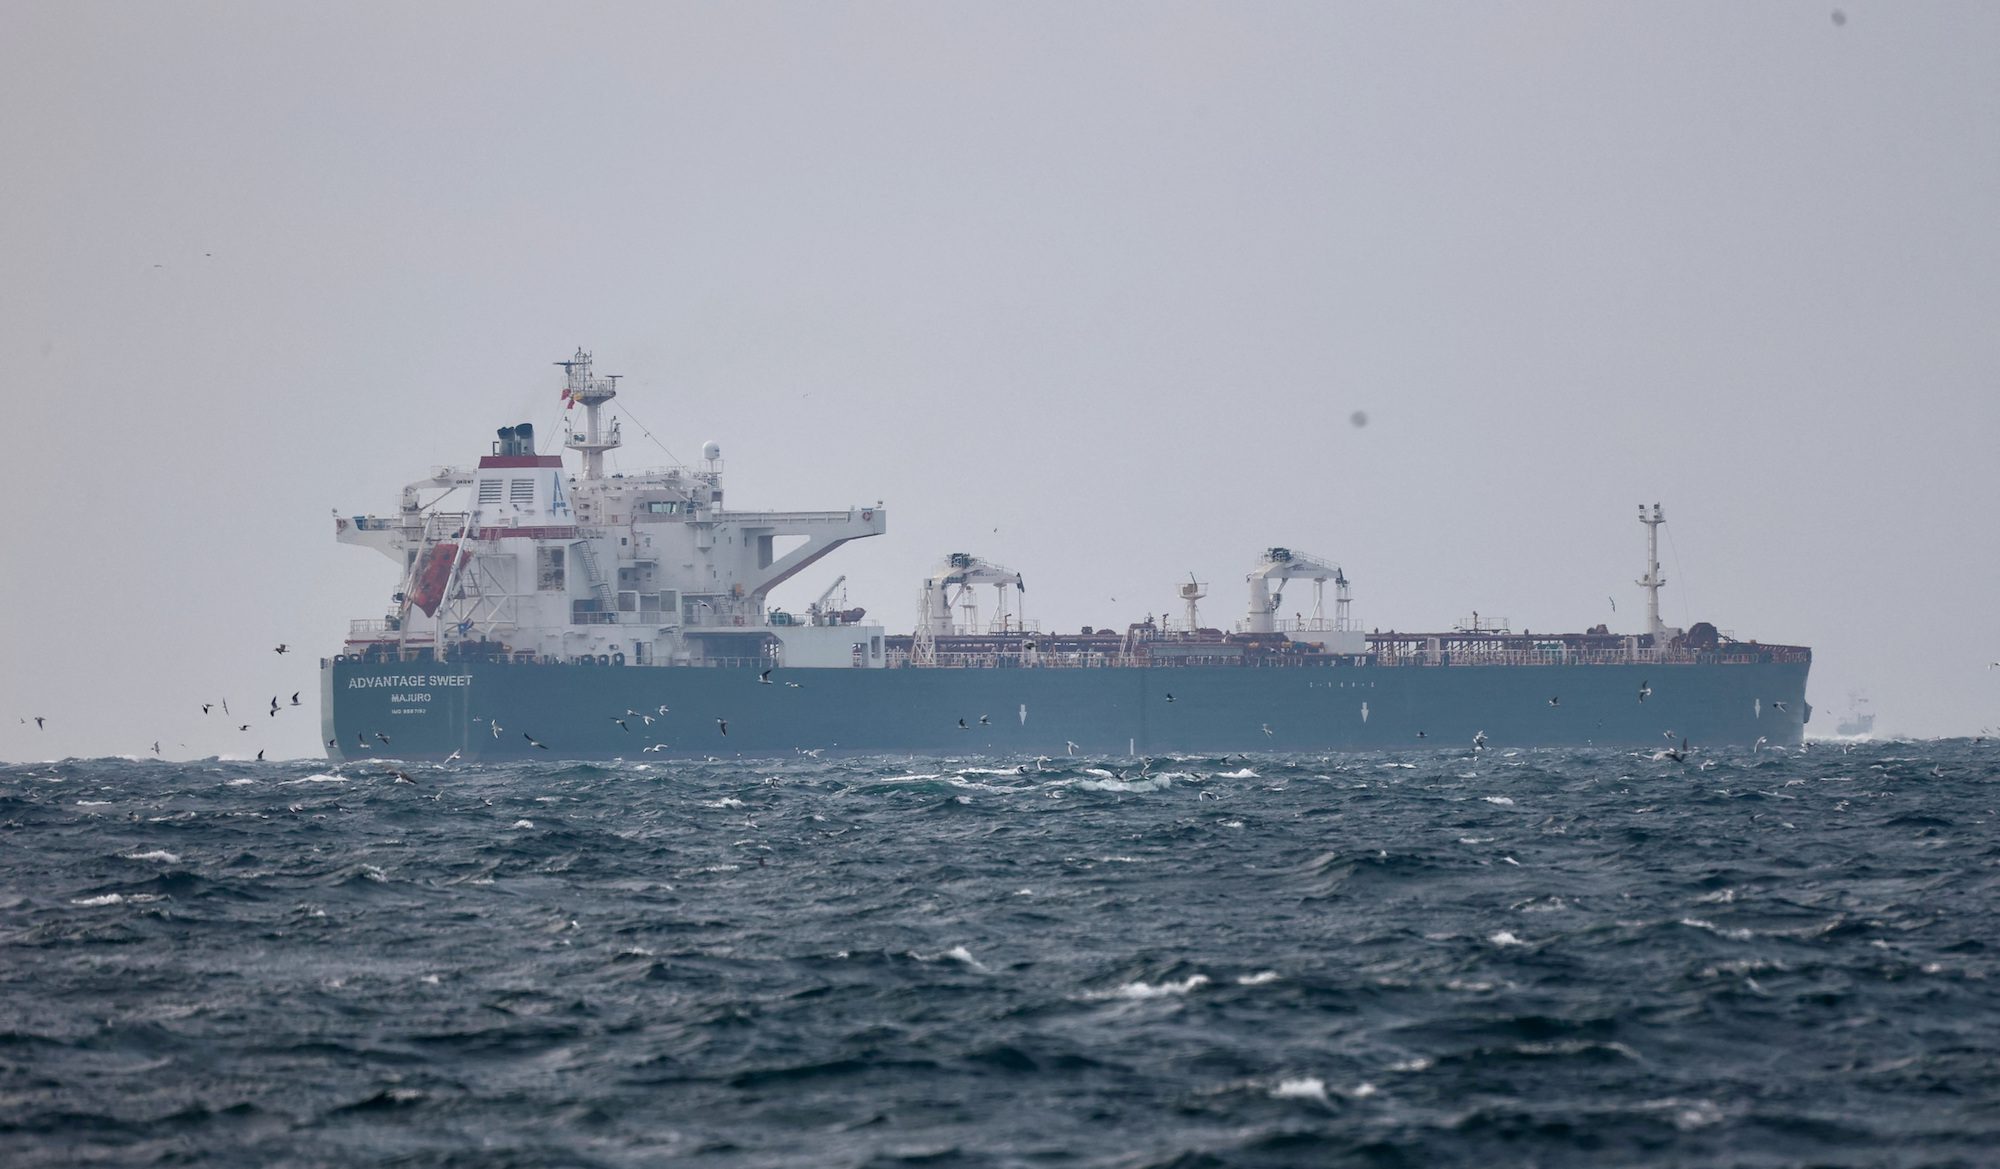 Iran Seizes Chevron-Chartered Tanker ‘Advantage Sweet’ in Gulf of Oman